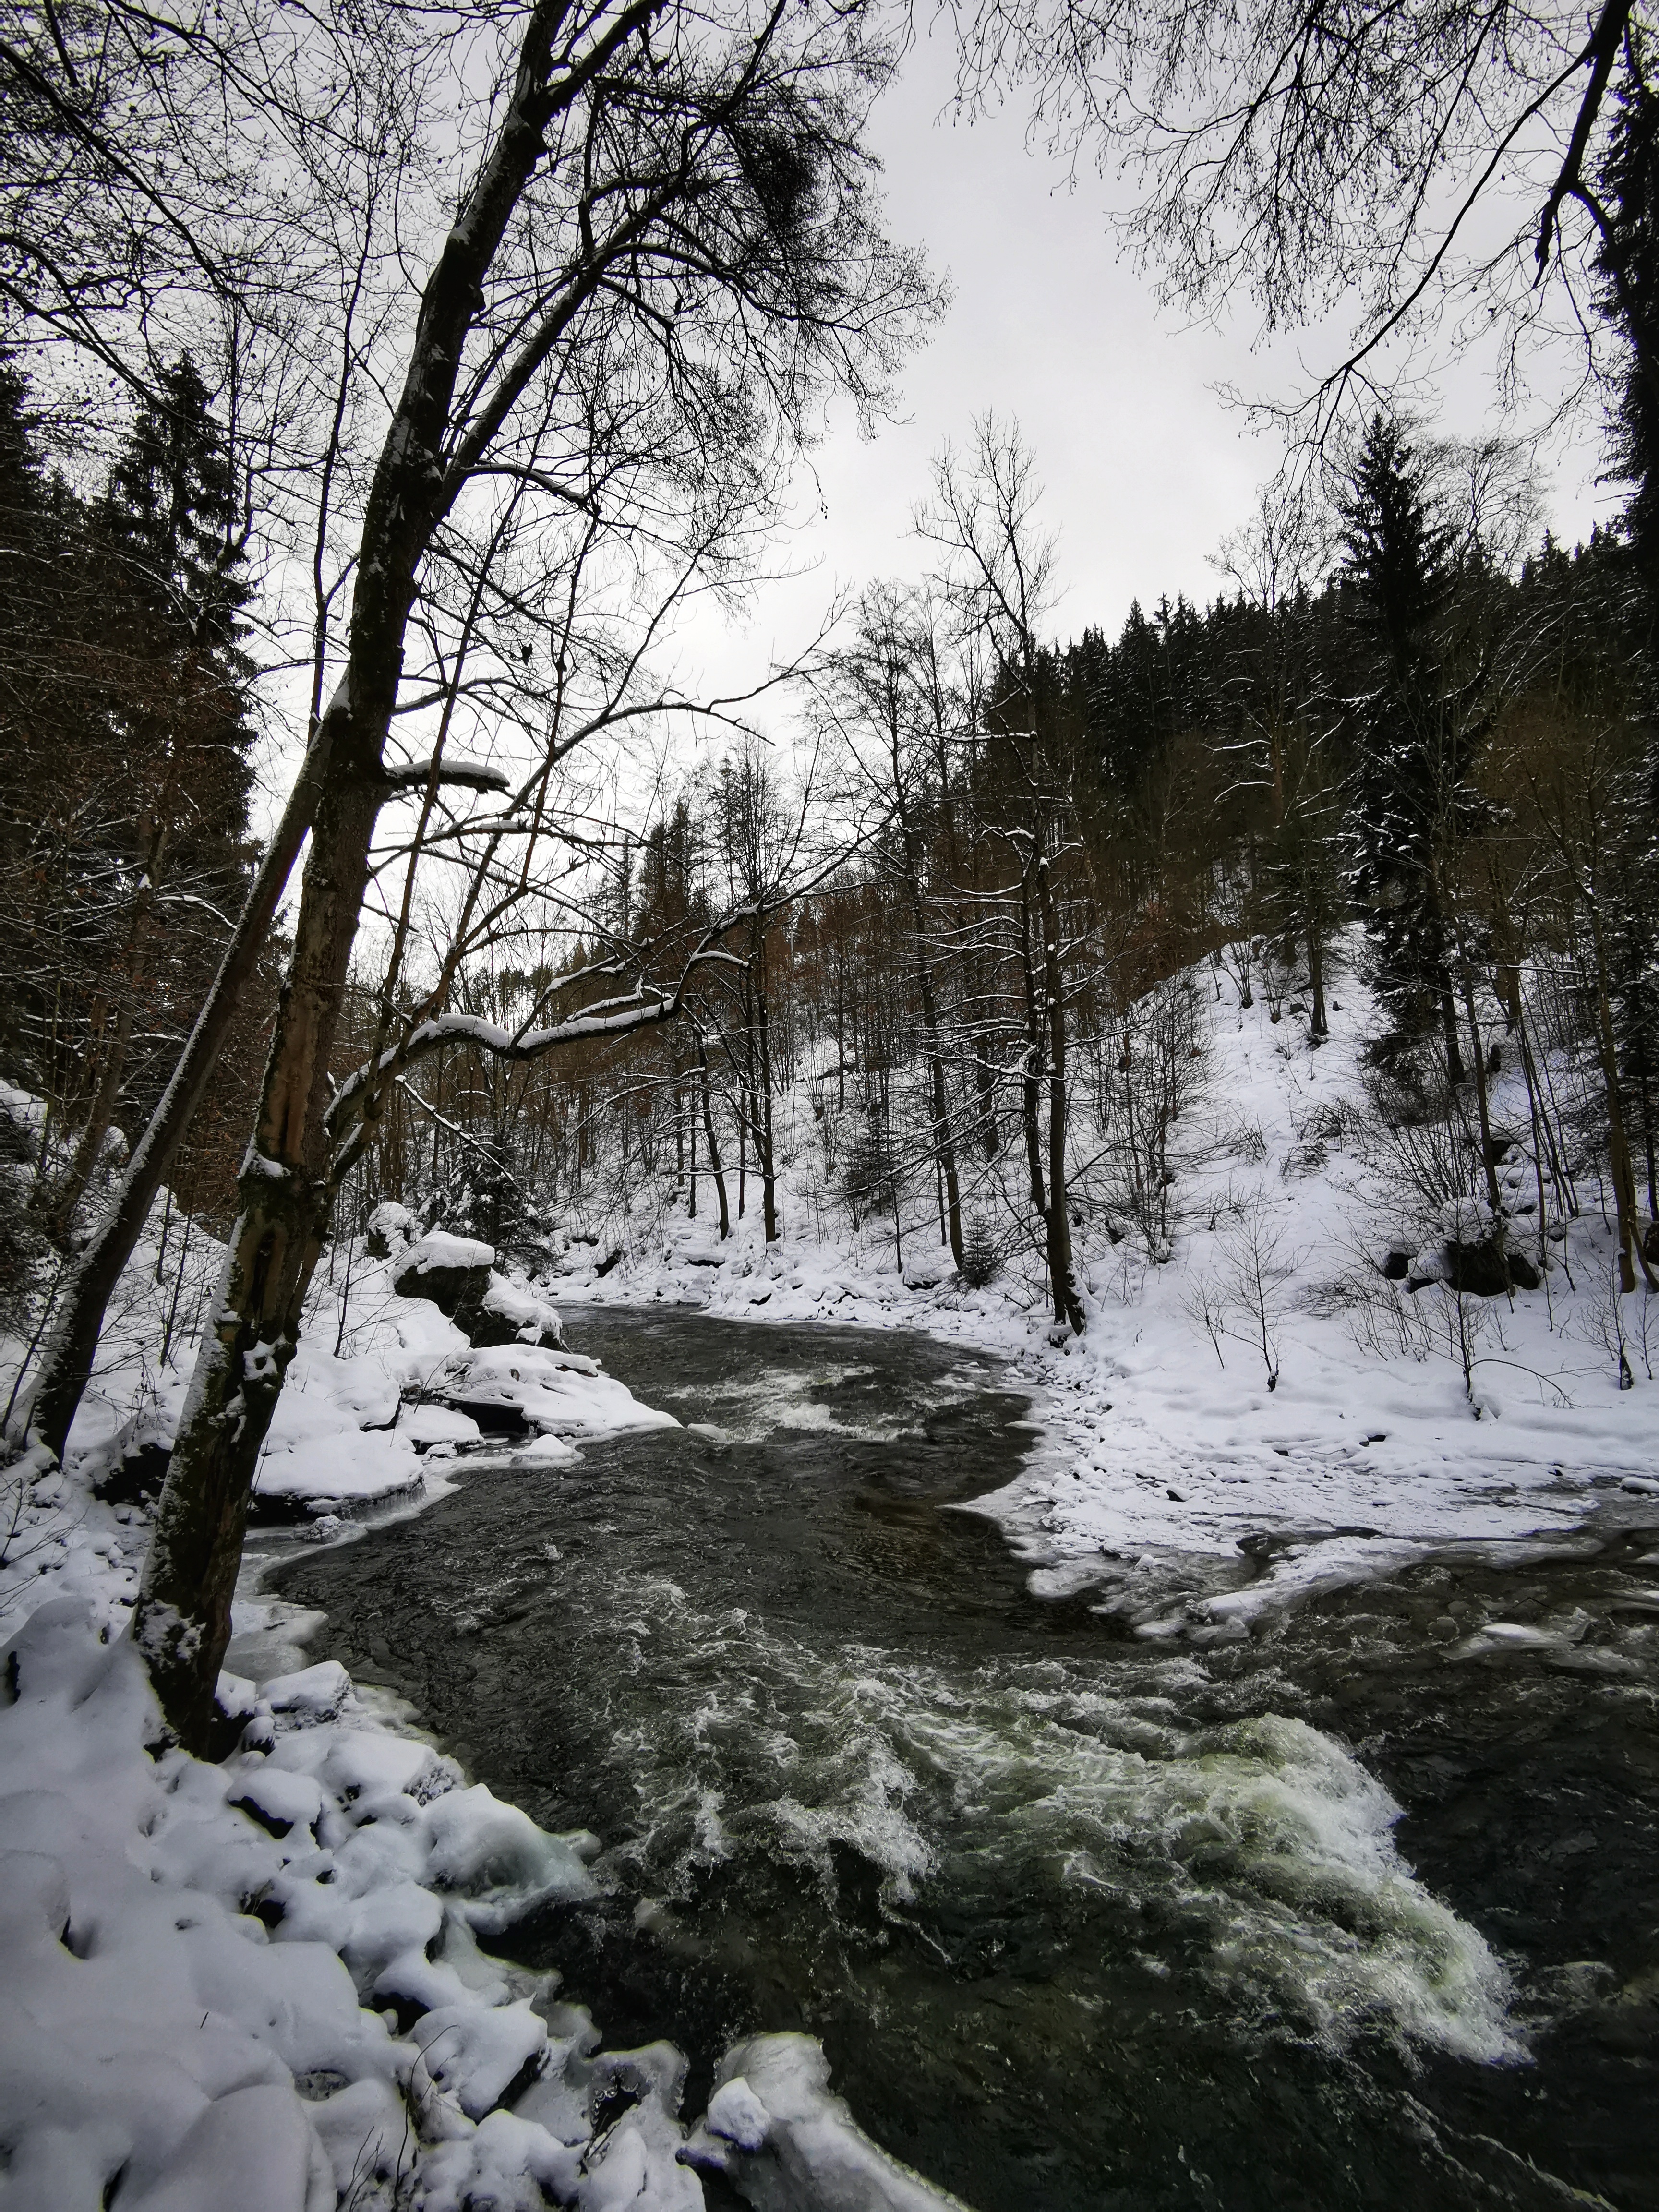 Kamenice river, Czech Republic